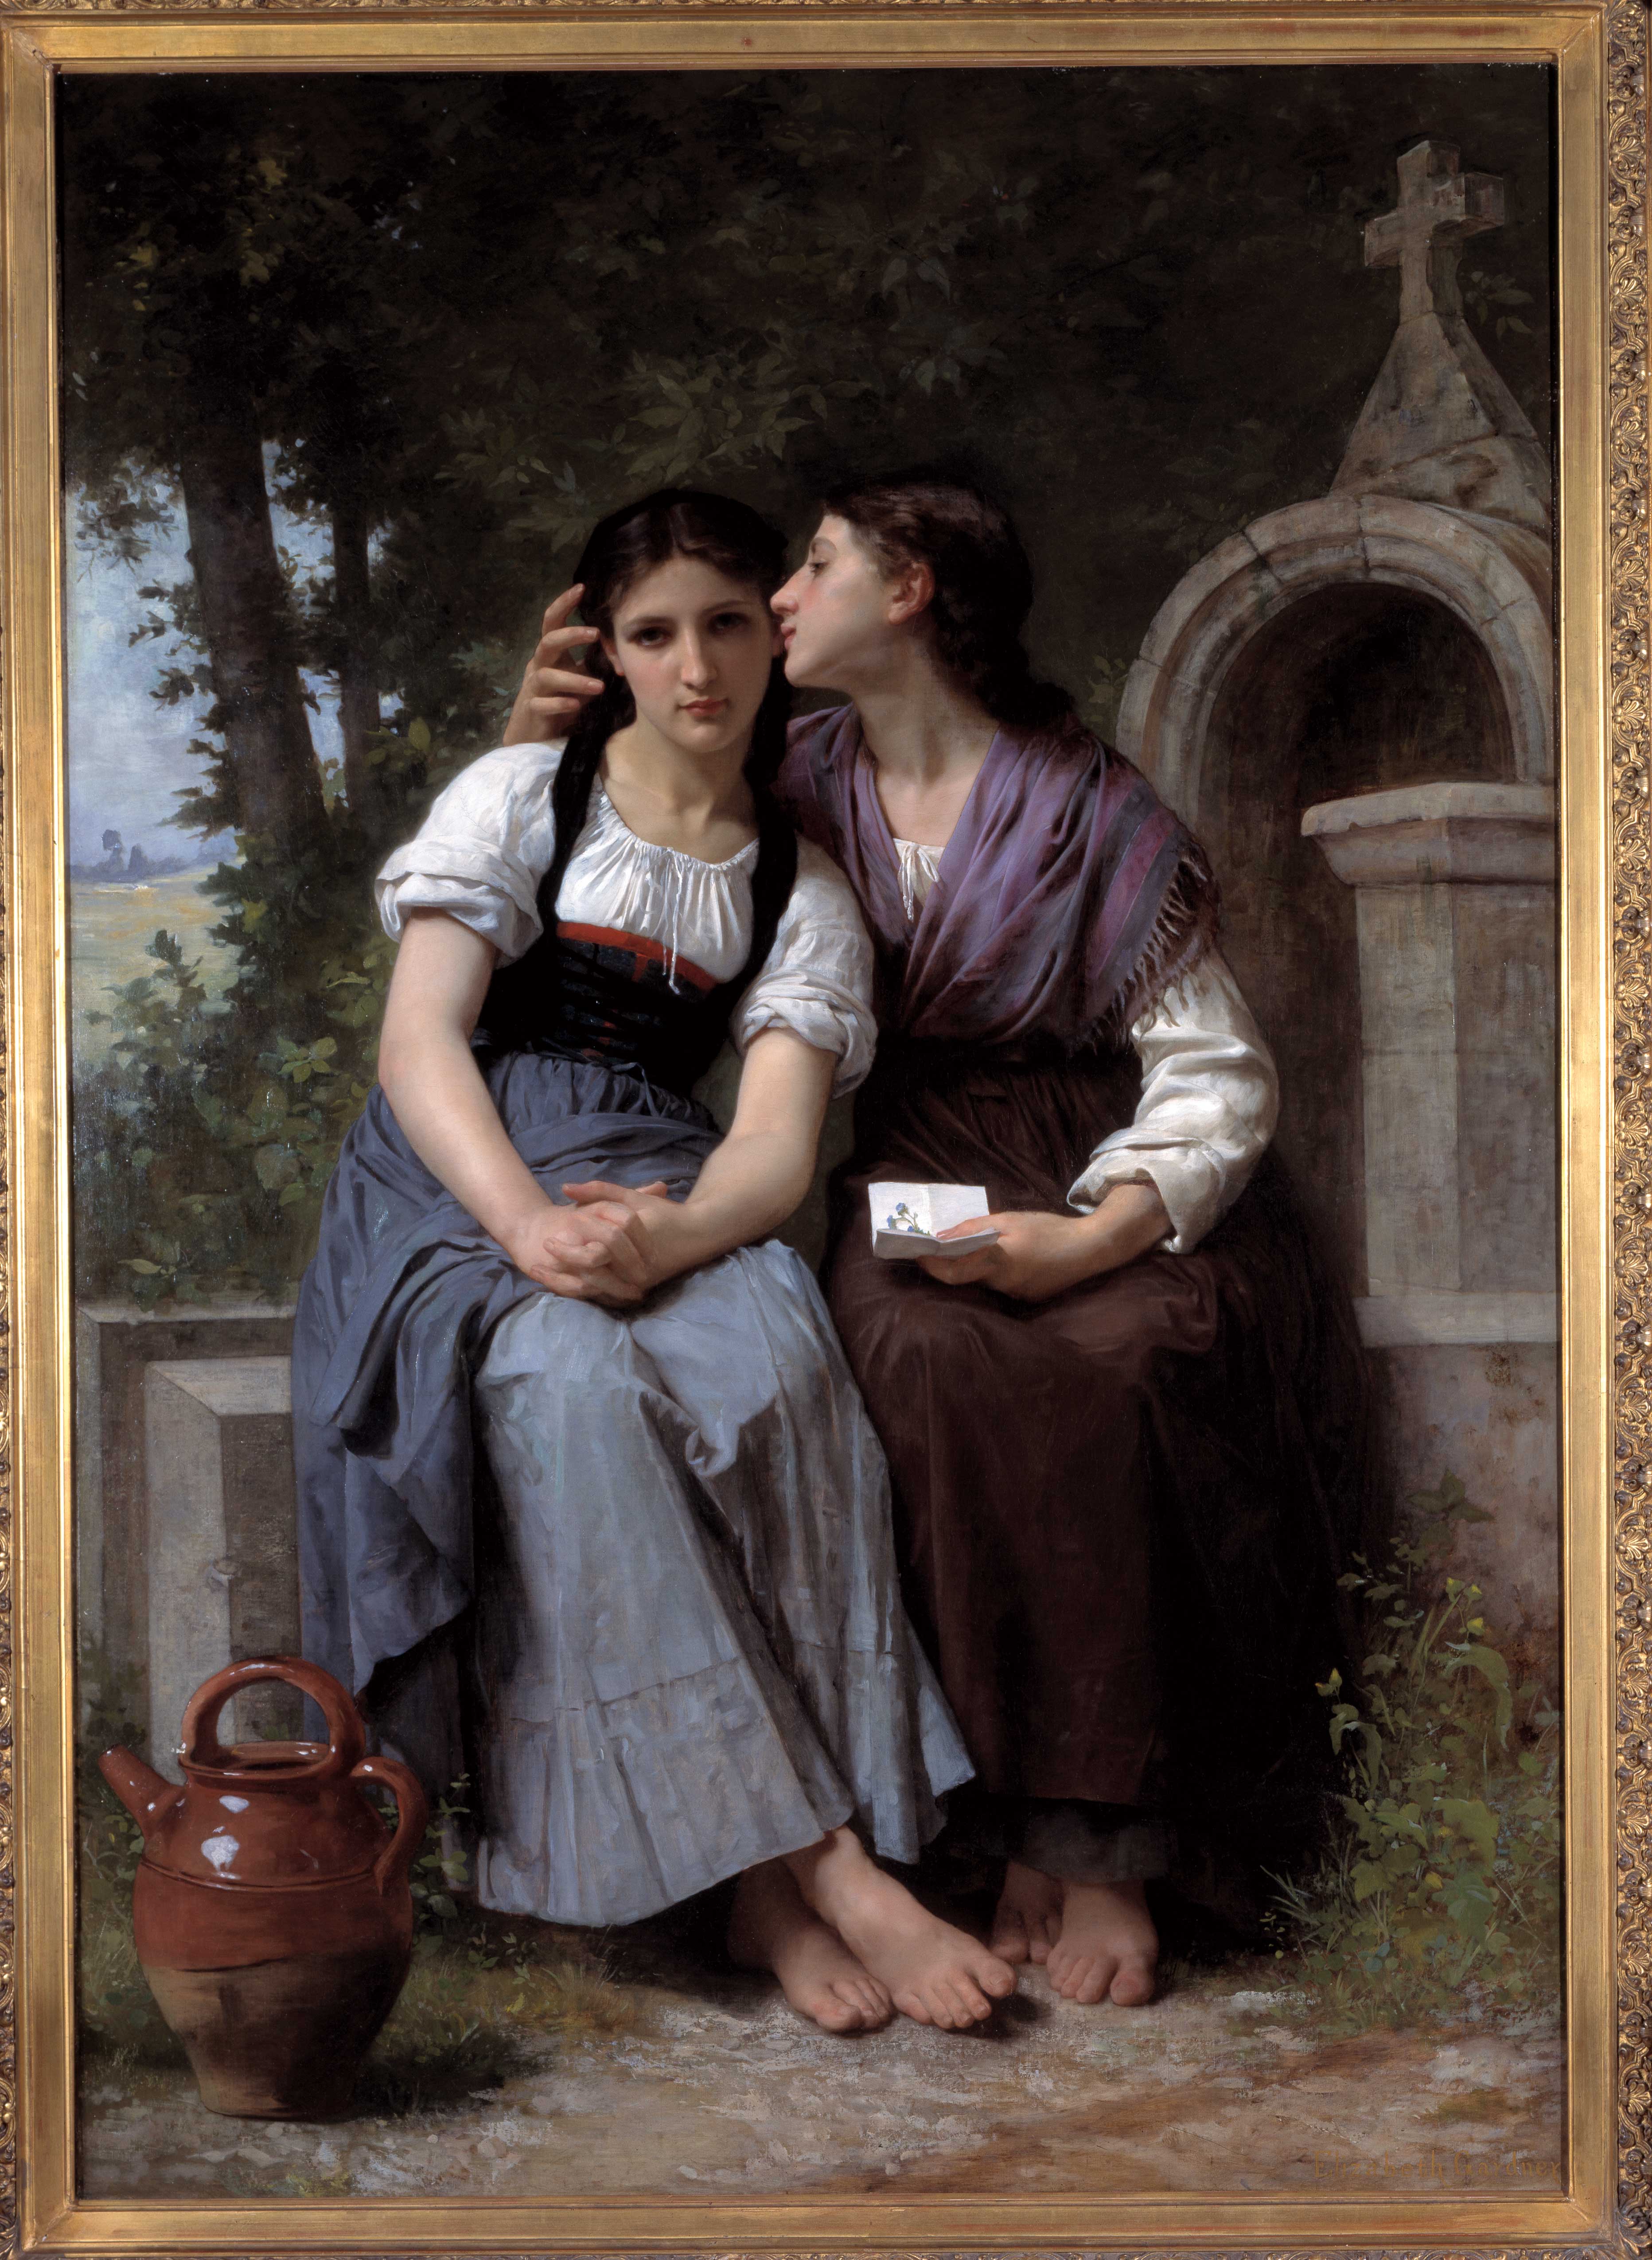 ला कॉन्फिडेंस by Elizabeth Jane Gardner Bouguereau - १८८० - ६८ × ४७ १/८ इंच 